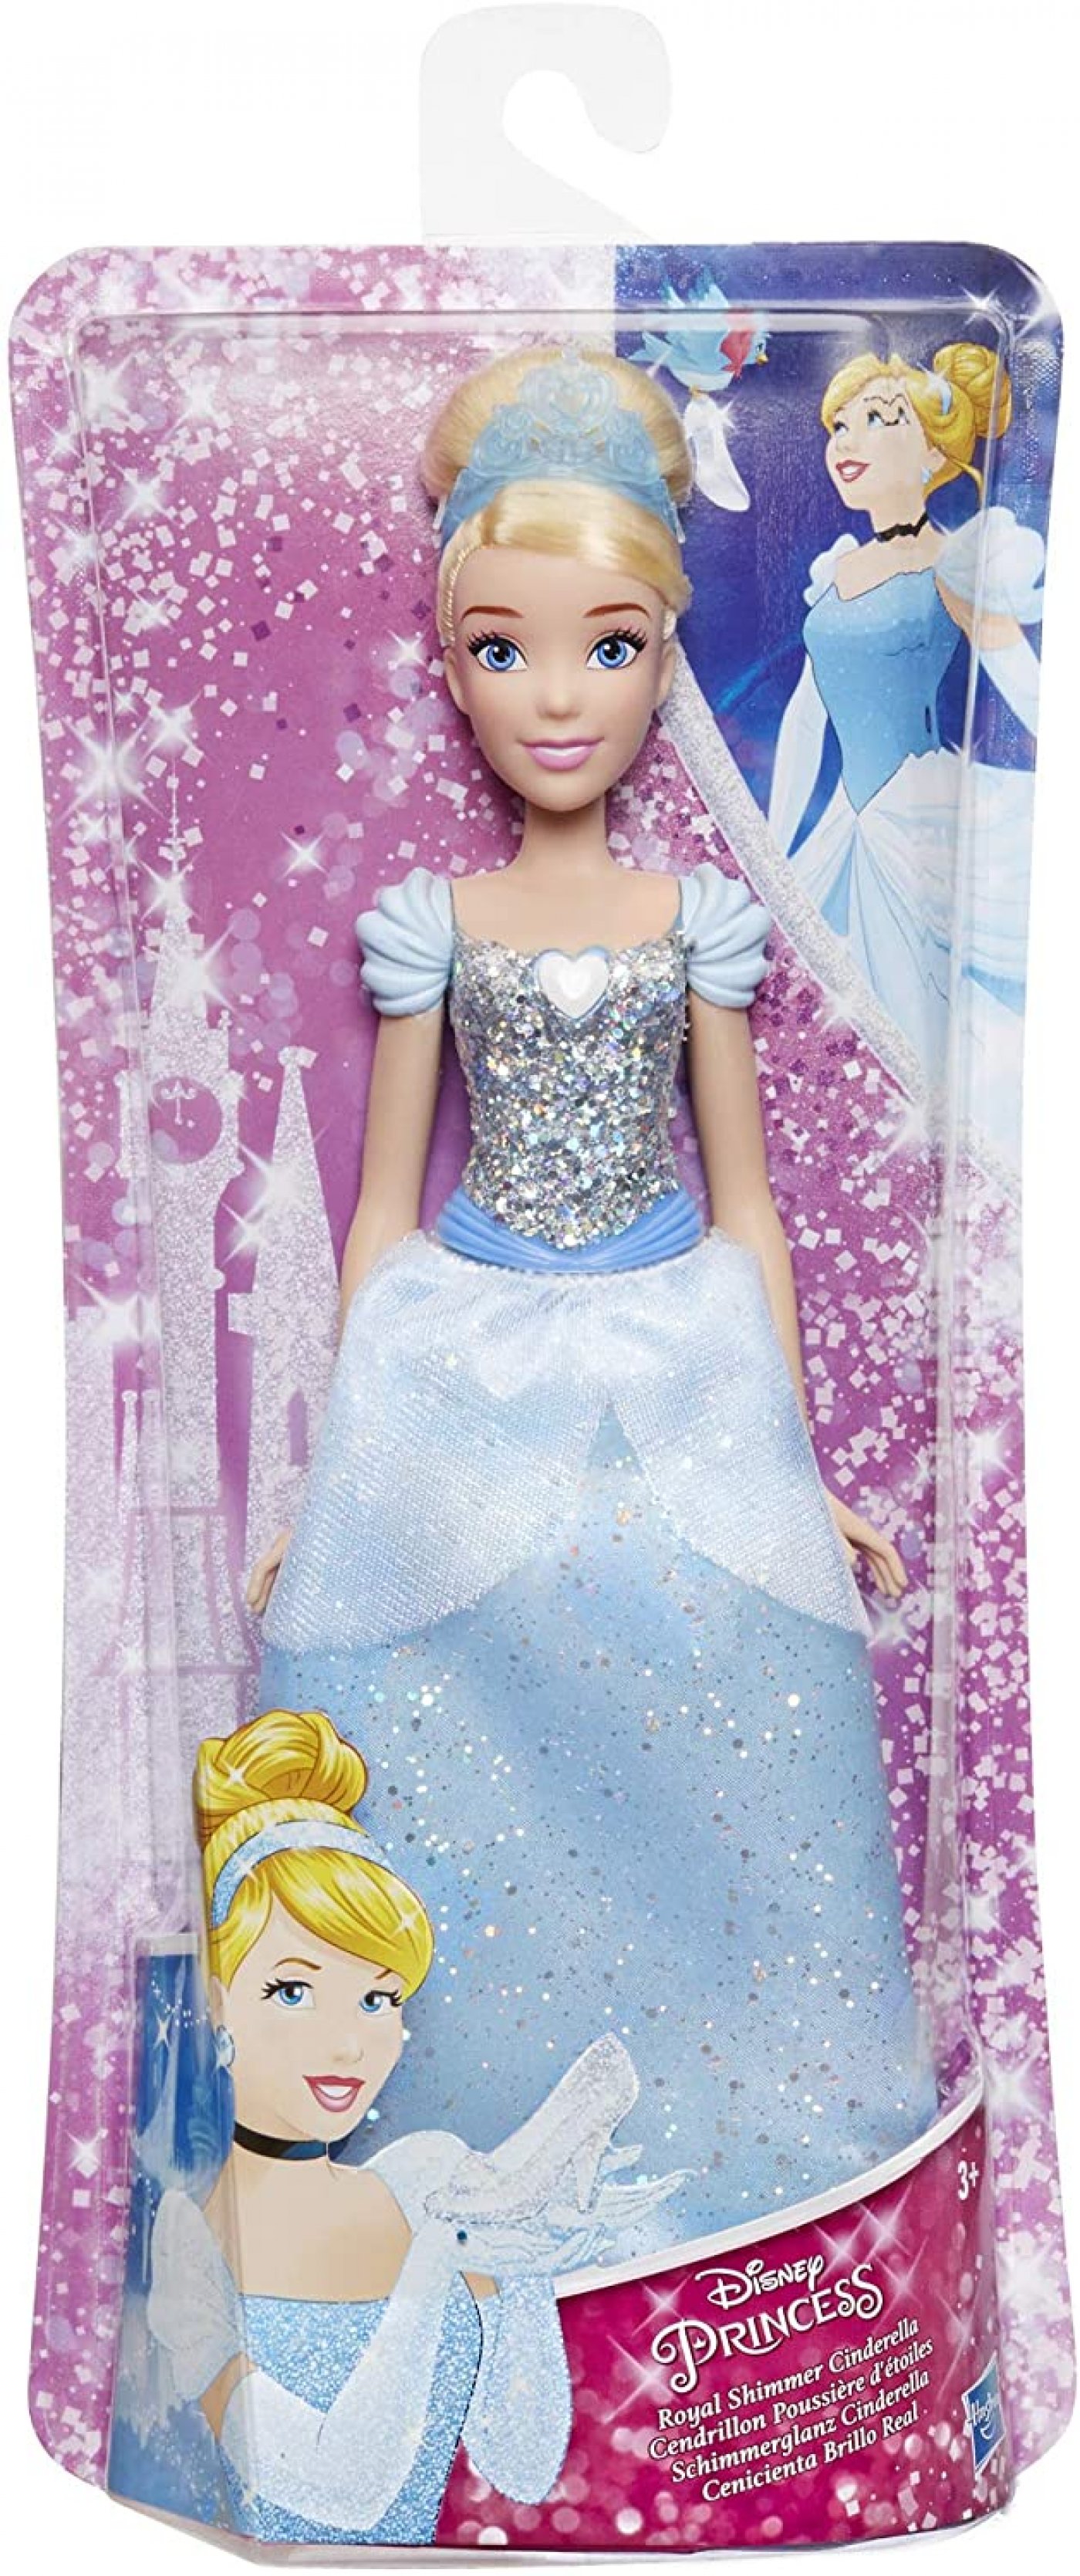 Muñeca Cenicienta Princesa Disney Original Hasbro